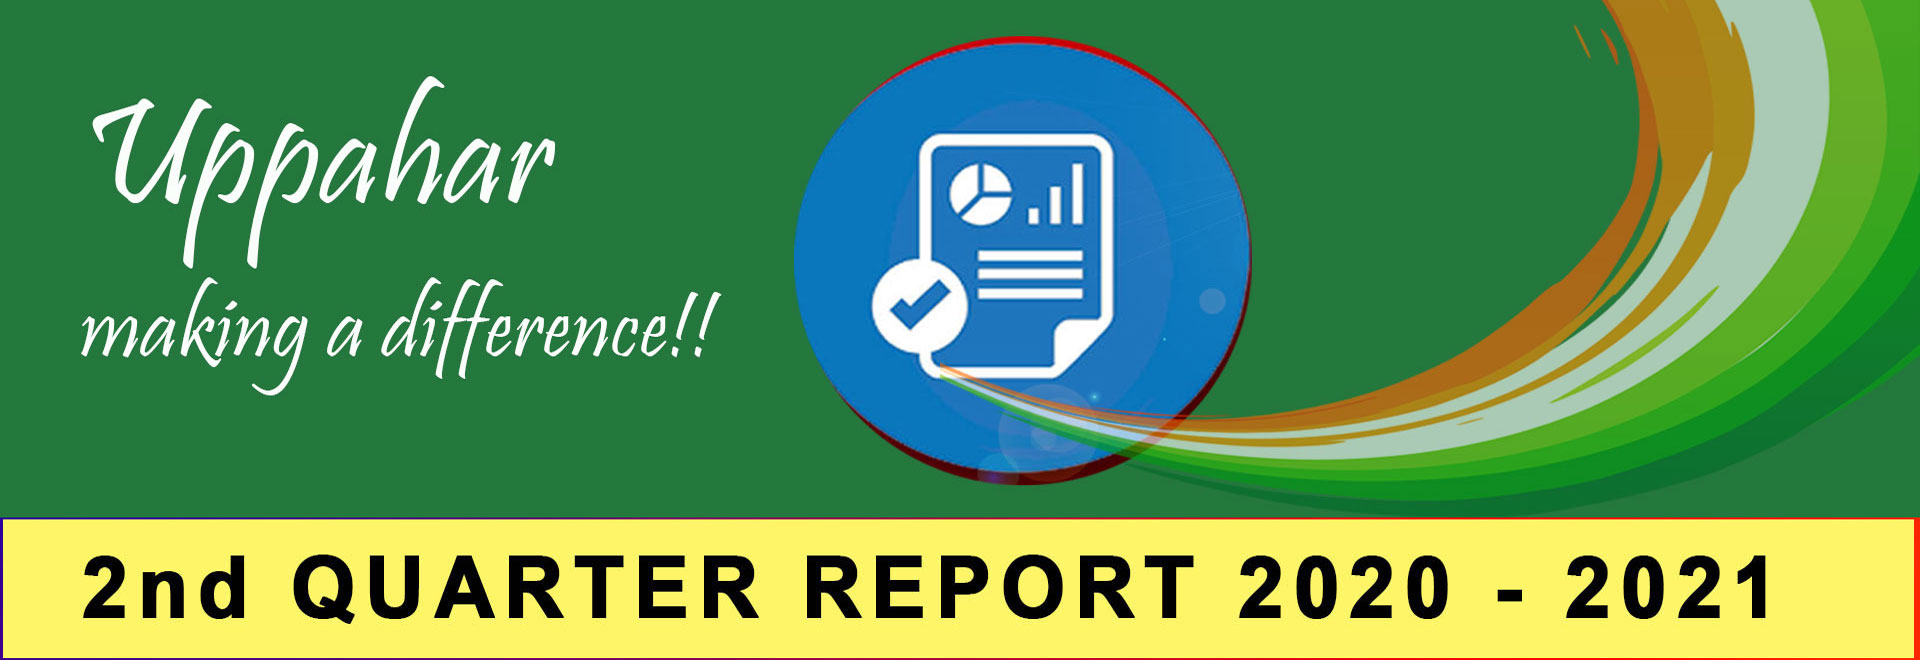 Uppahar India 2nd Quarterly Report 2020-2021